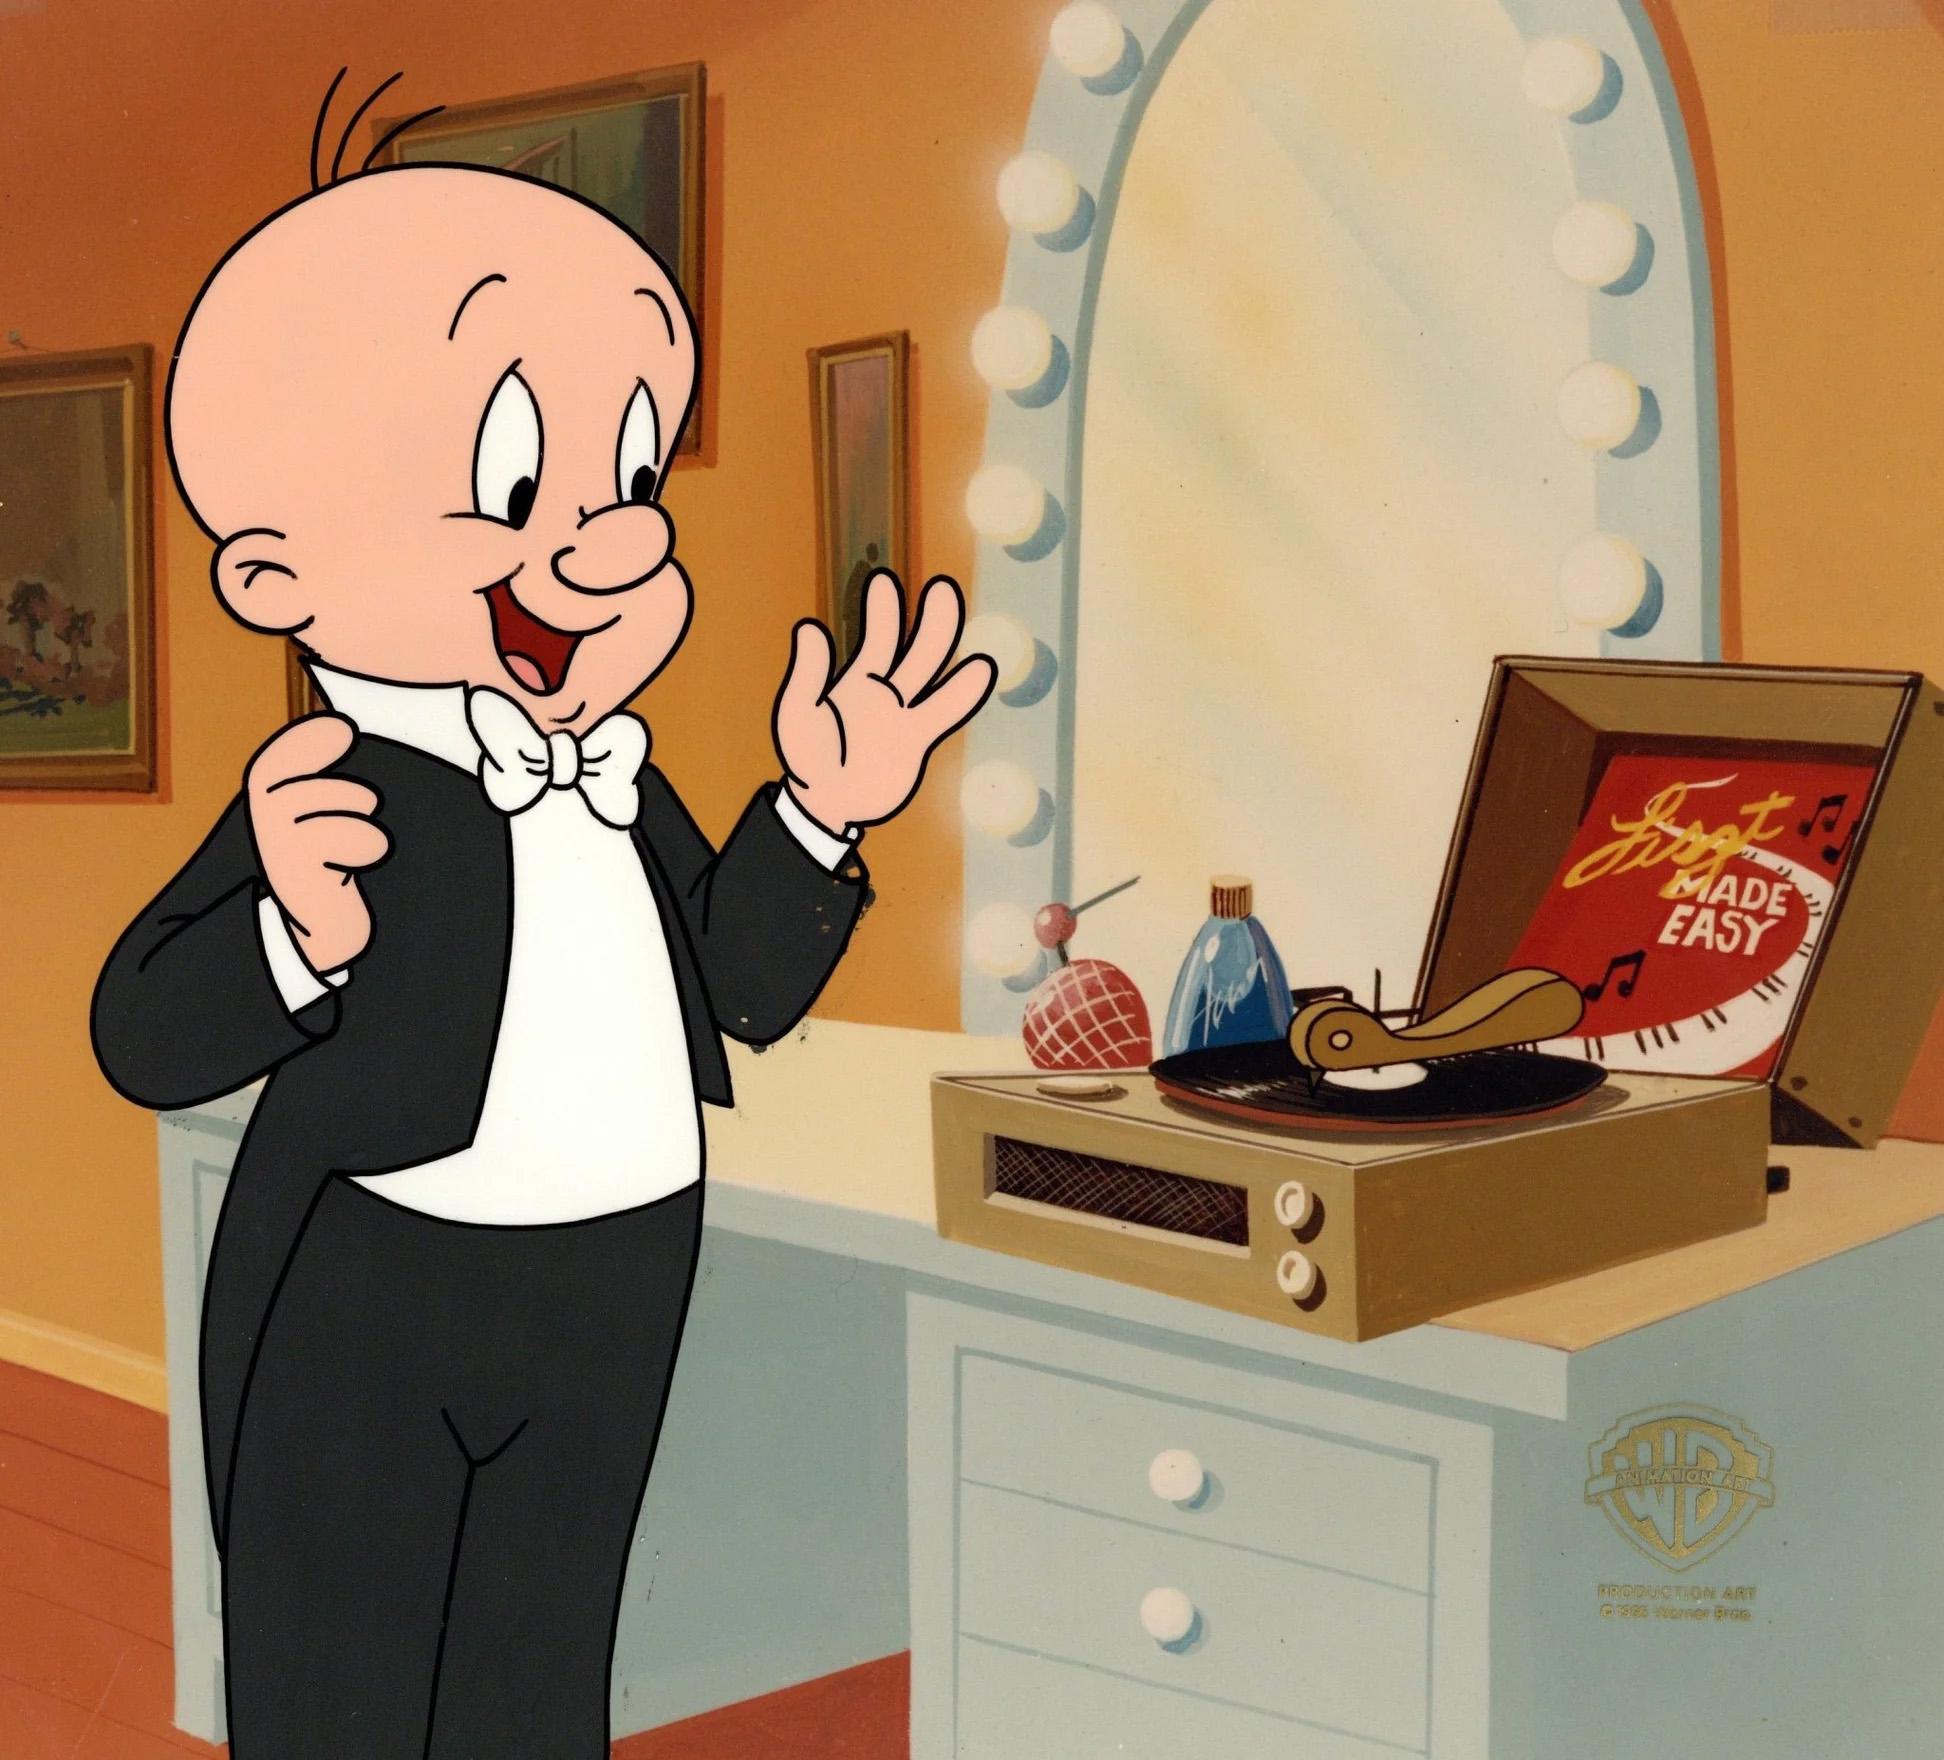 Looney Tunes Original Production Cel: Elmer Fudd - Art by Looney Tunes Studio Artists